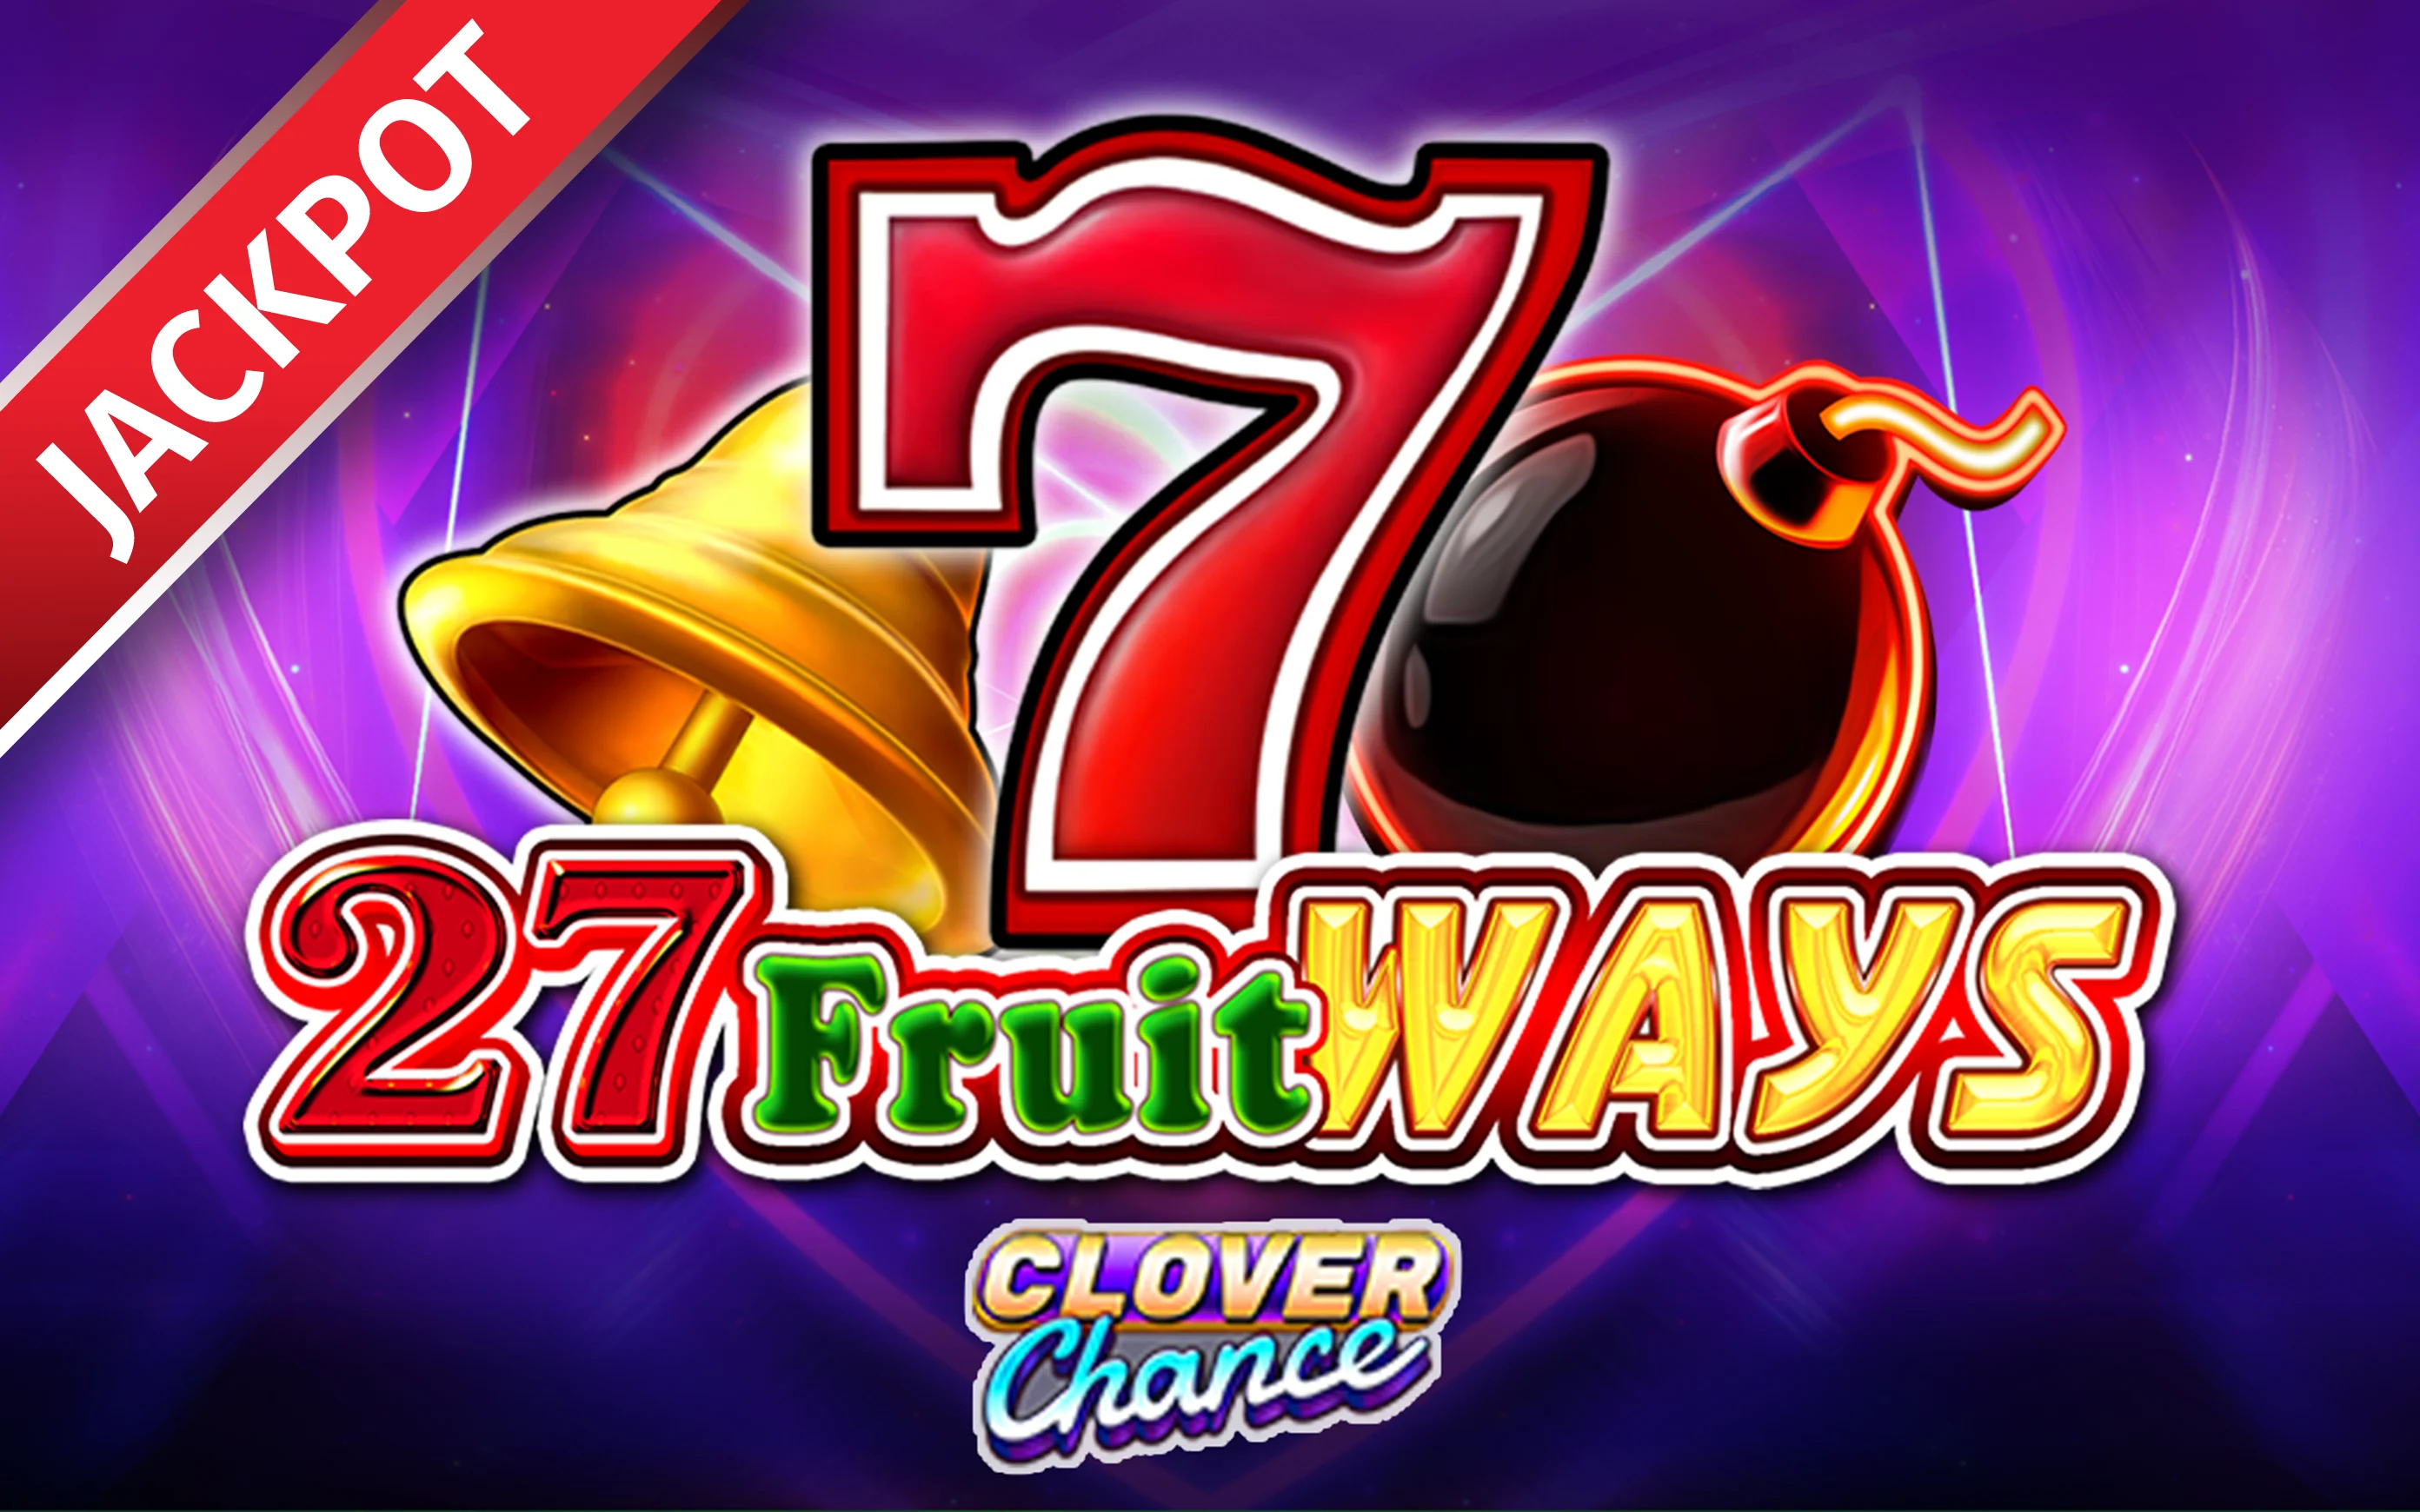 Play 27 Fruit Ways on Starcasino.be online casino